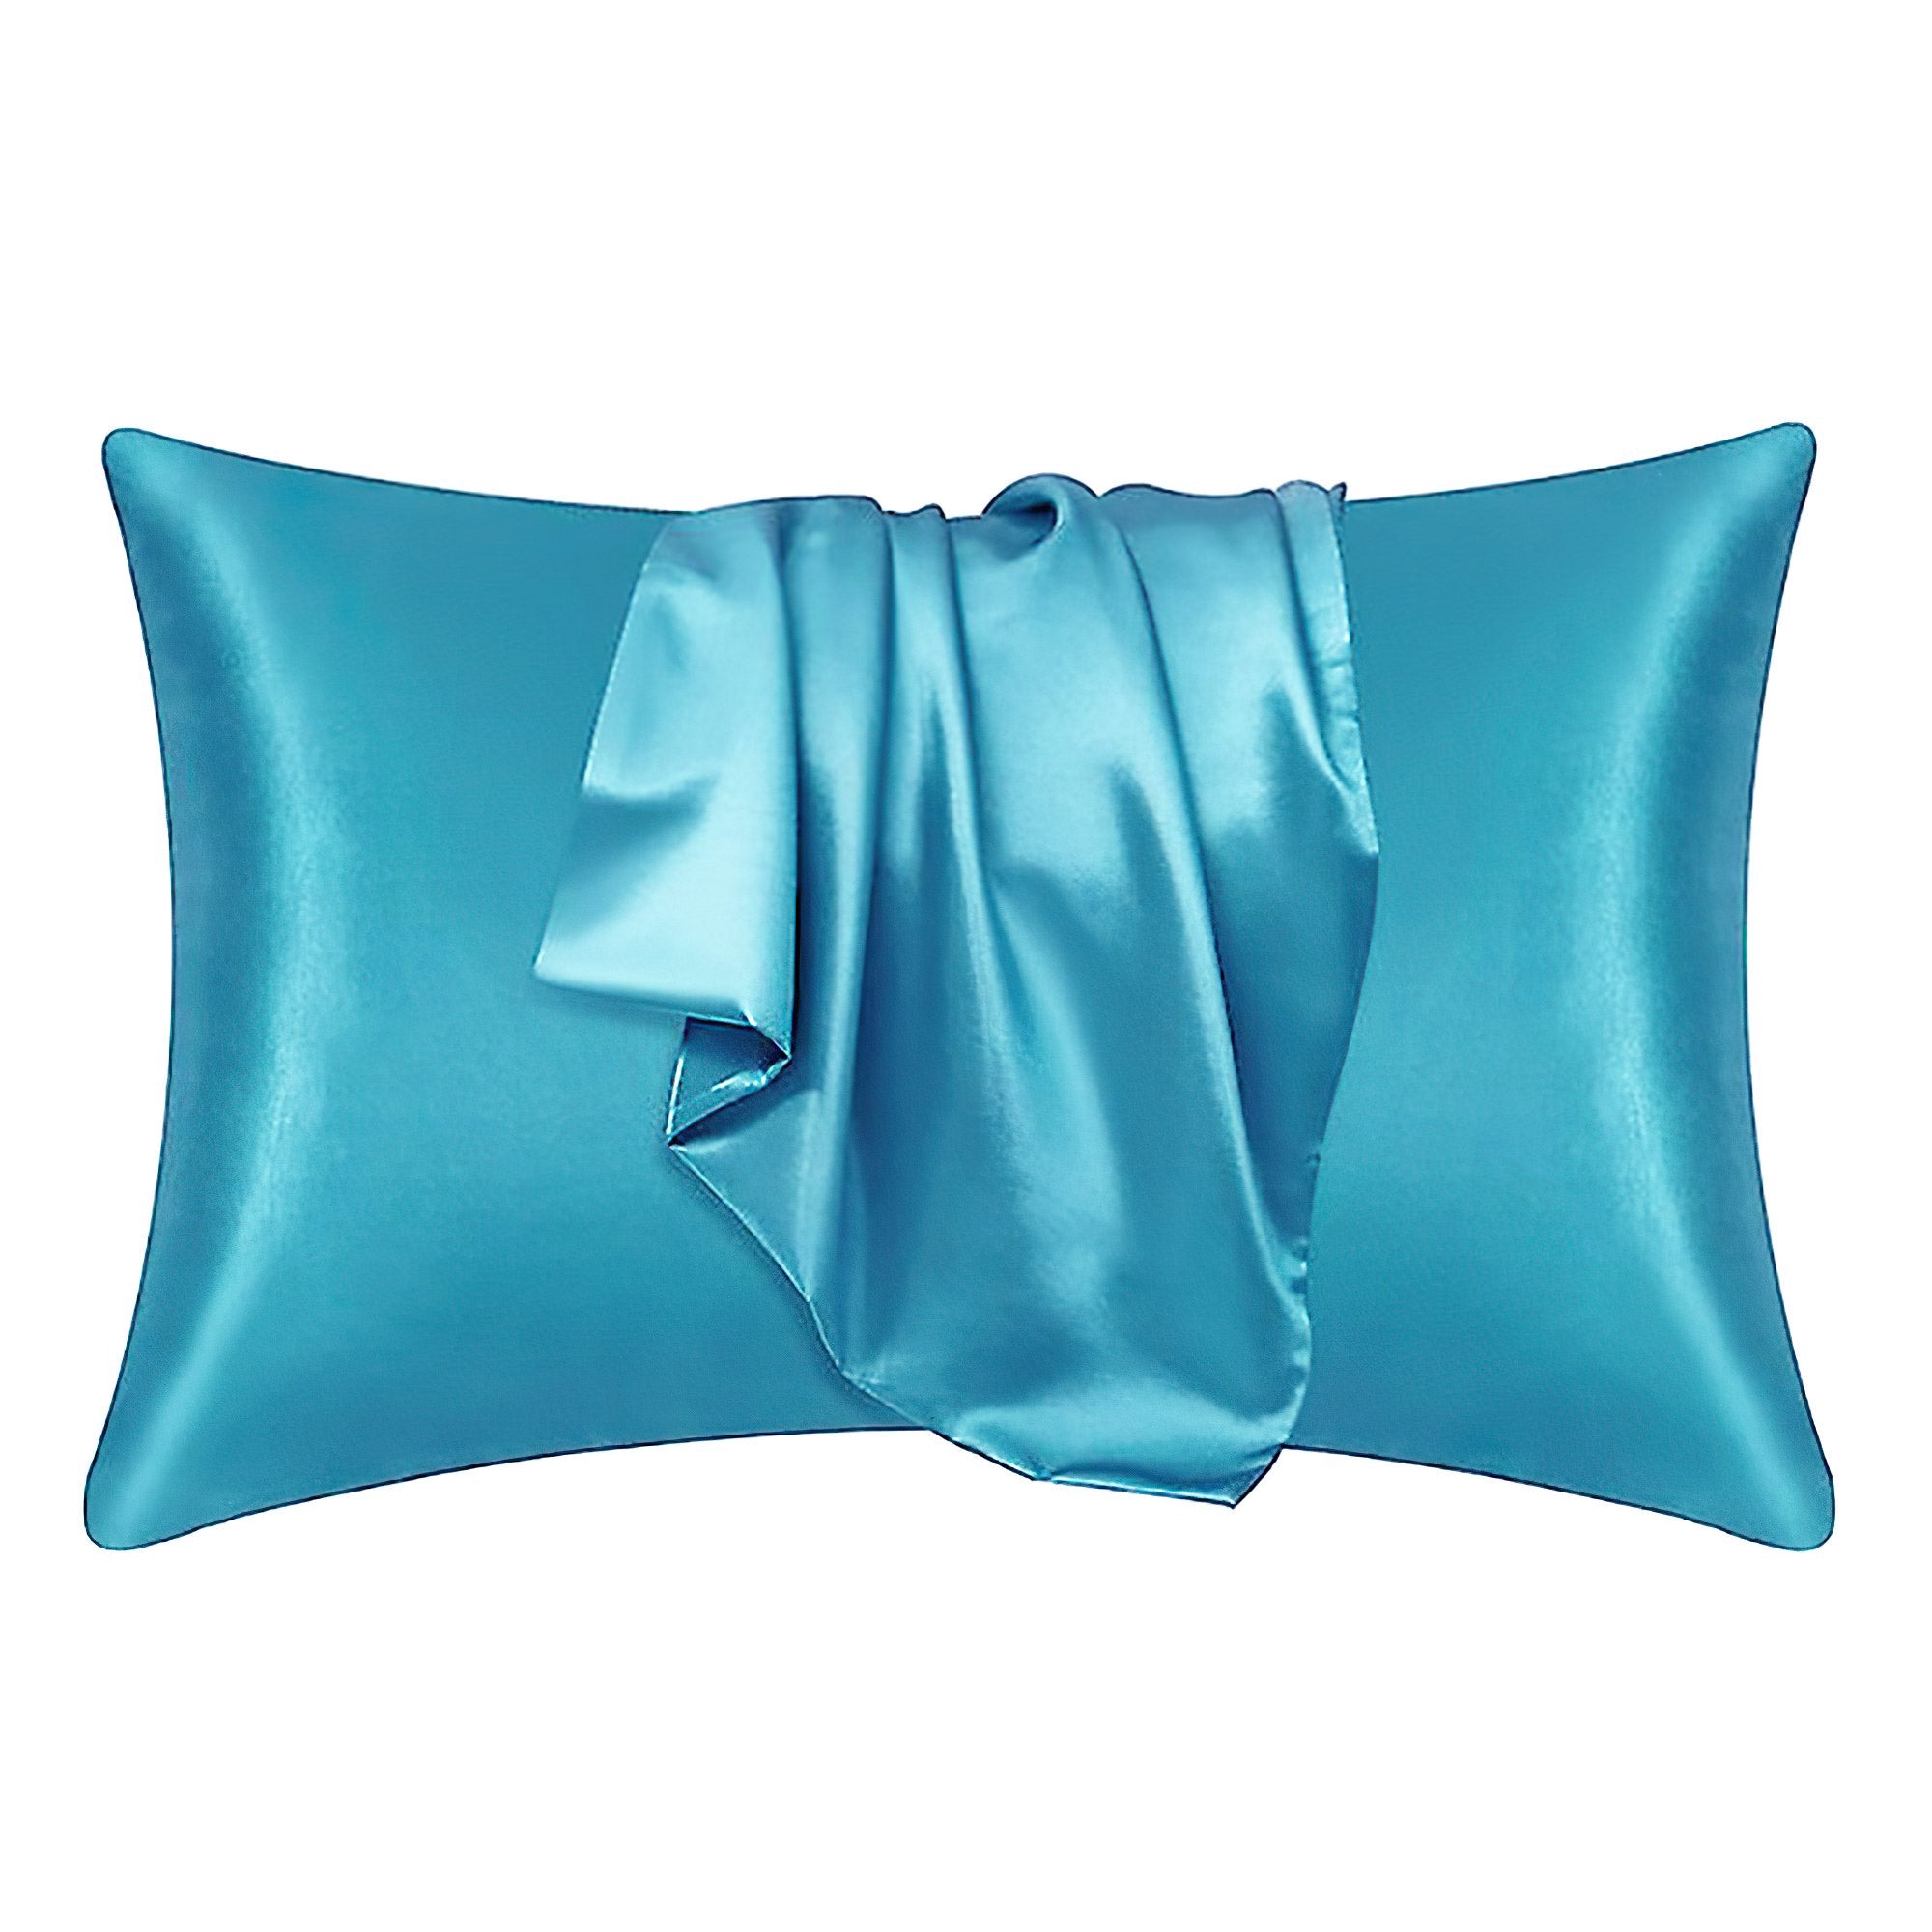 Taie d'oreiller en satin Bleu clair -Turquoise 60 x 70 cm taille standard - Taie d'oreiller en satin soyeux